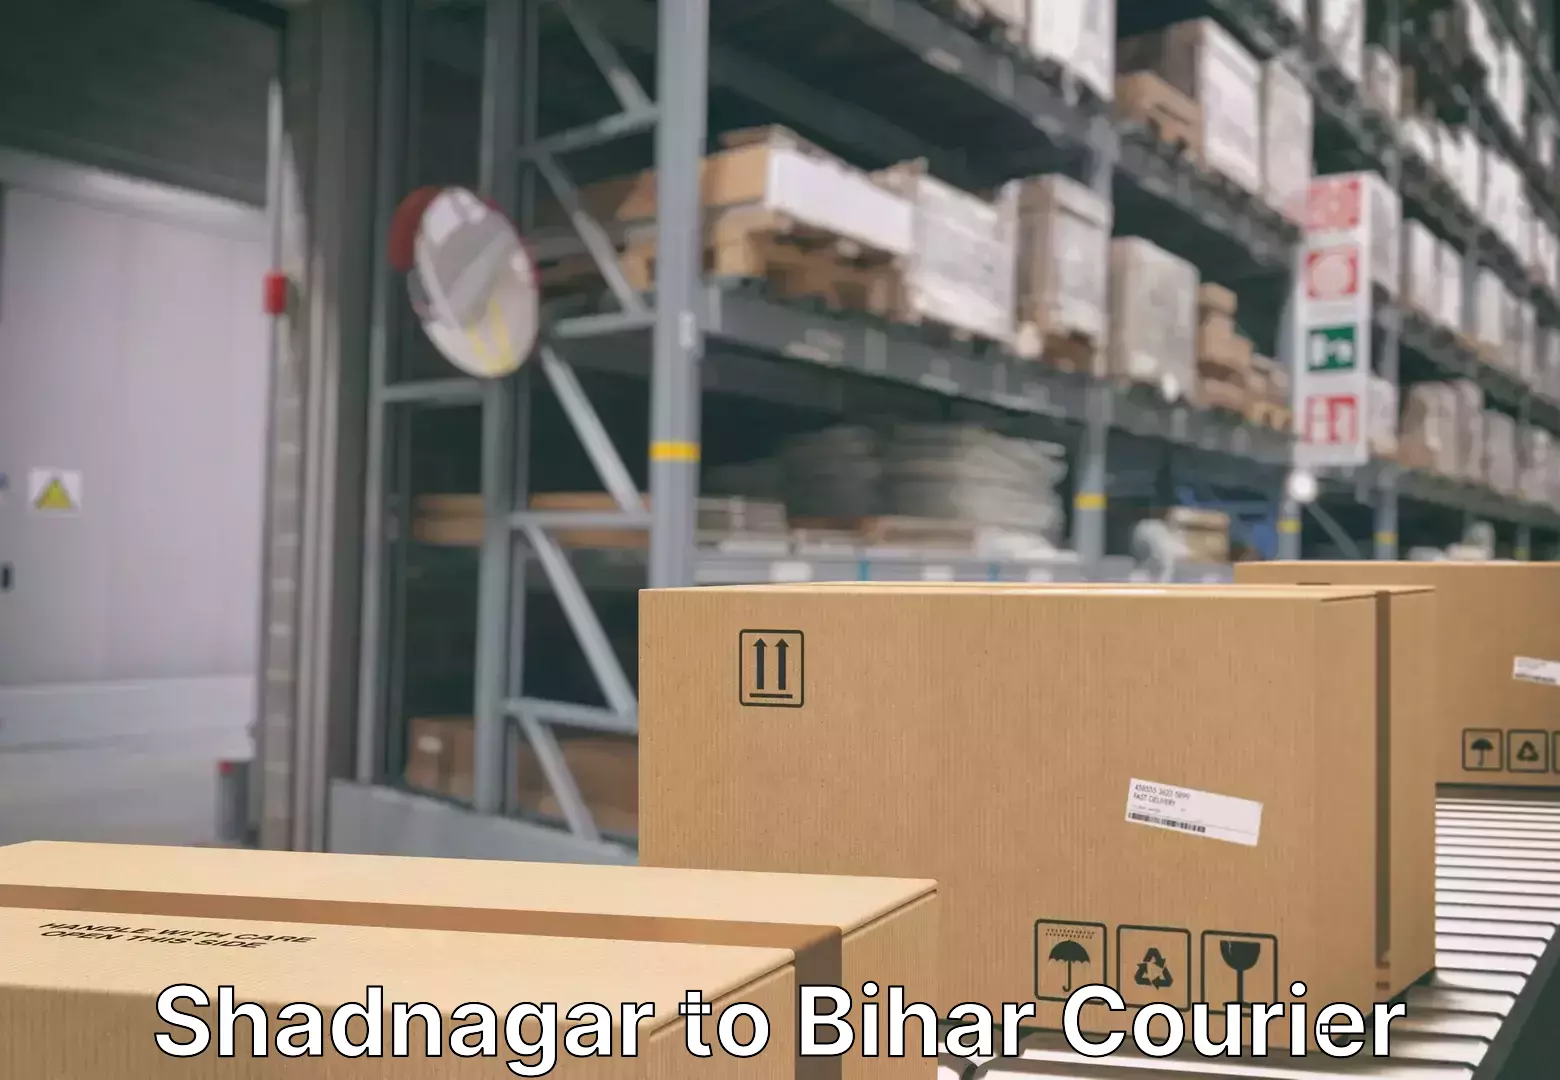 Furniture delivery service Shadnagar to Bihar